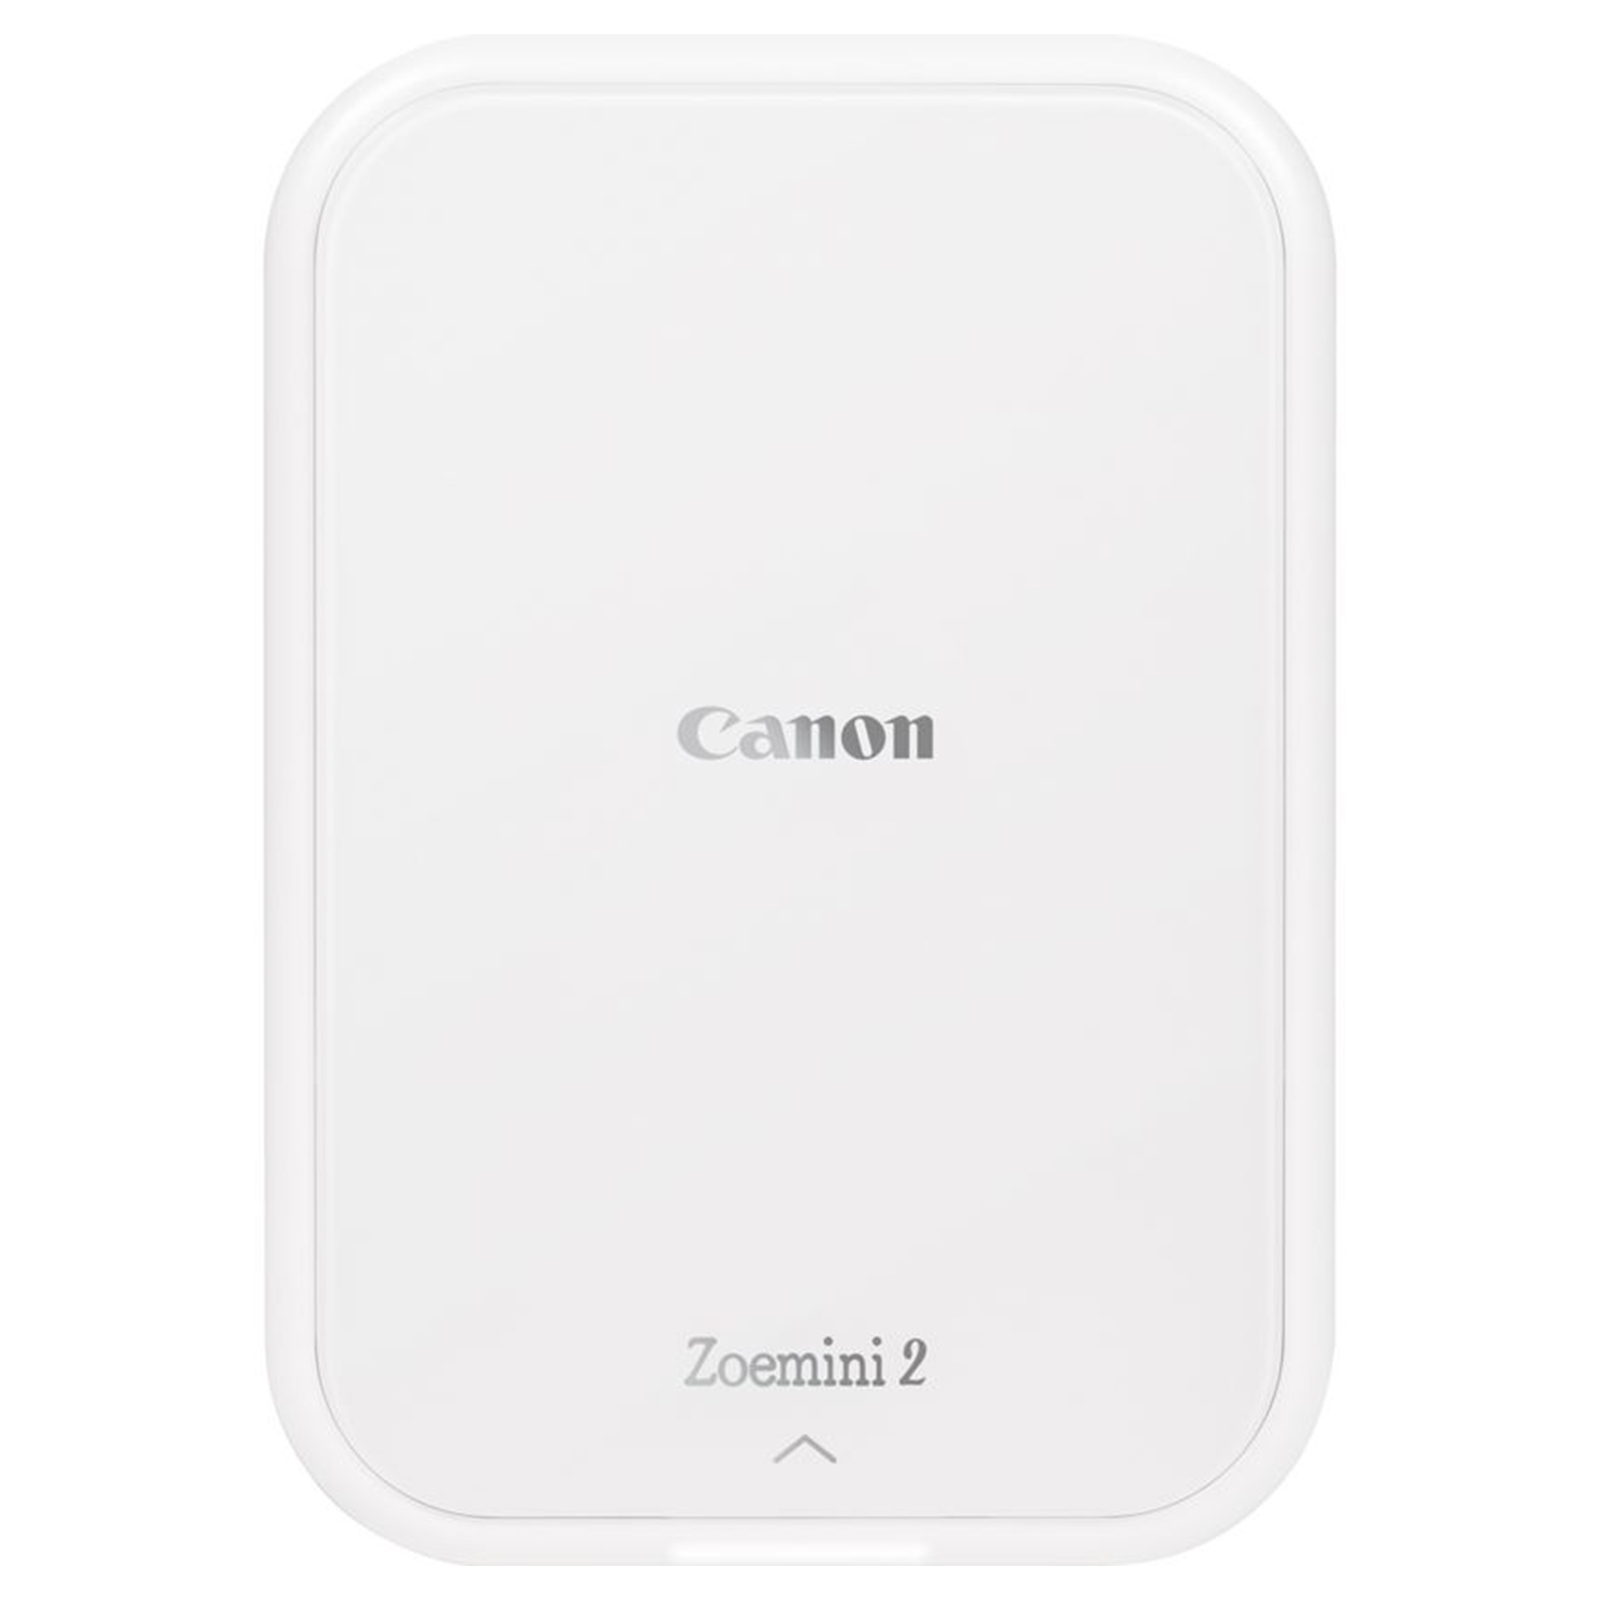 Canon Zoemini 2 Portable Colour Photo Printer - White